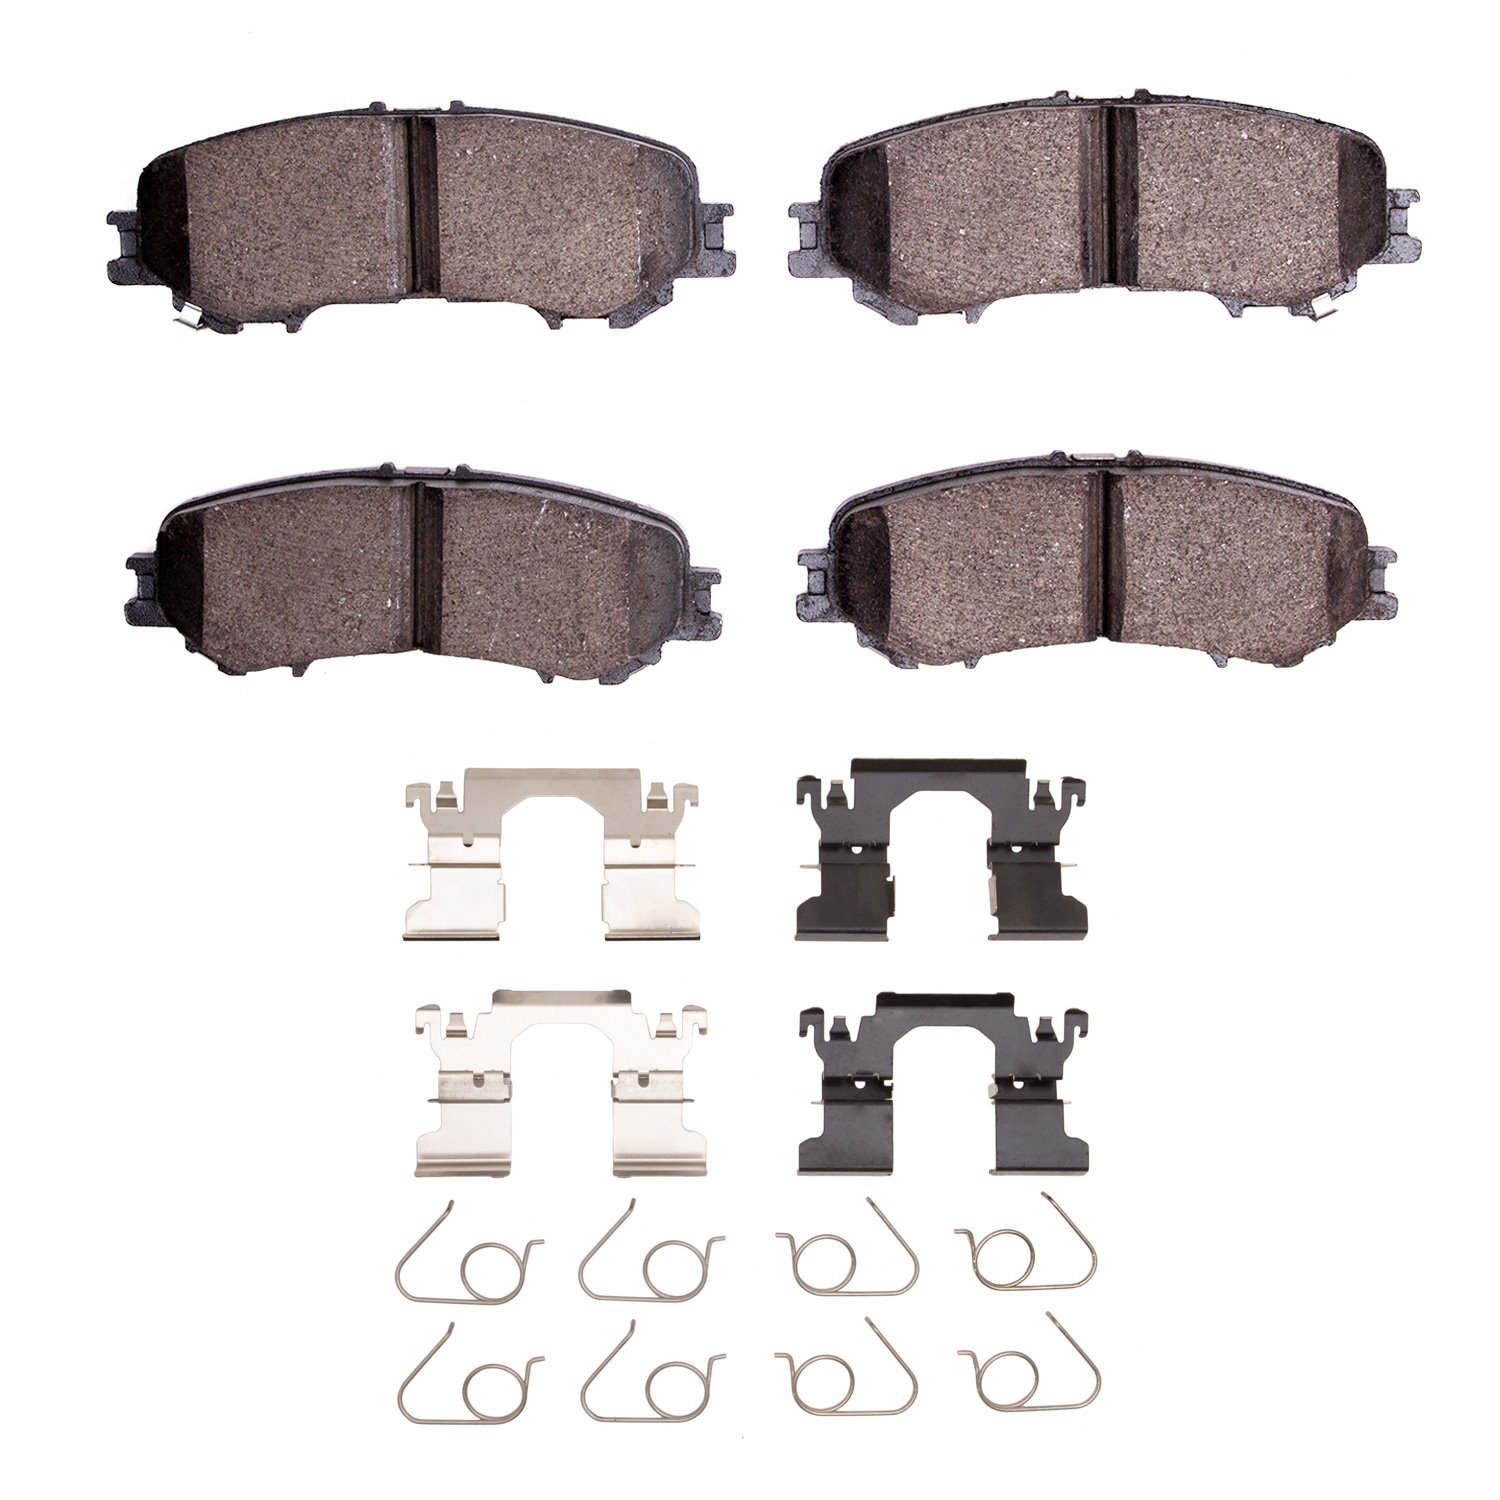 1551-2032-01 5000 Advanced Ceramic Brake Pads & Hardware Kit, Fits Select Infiniti/Nissan, Position: Rear